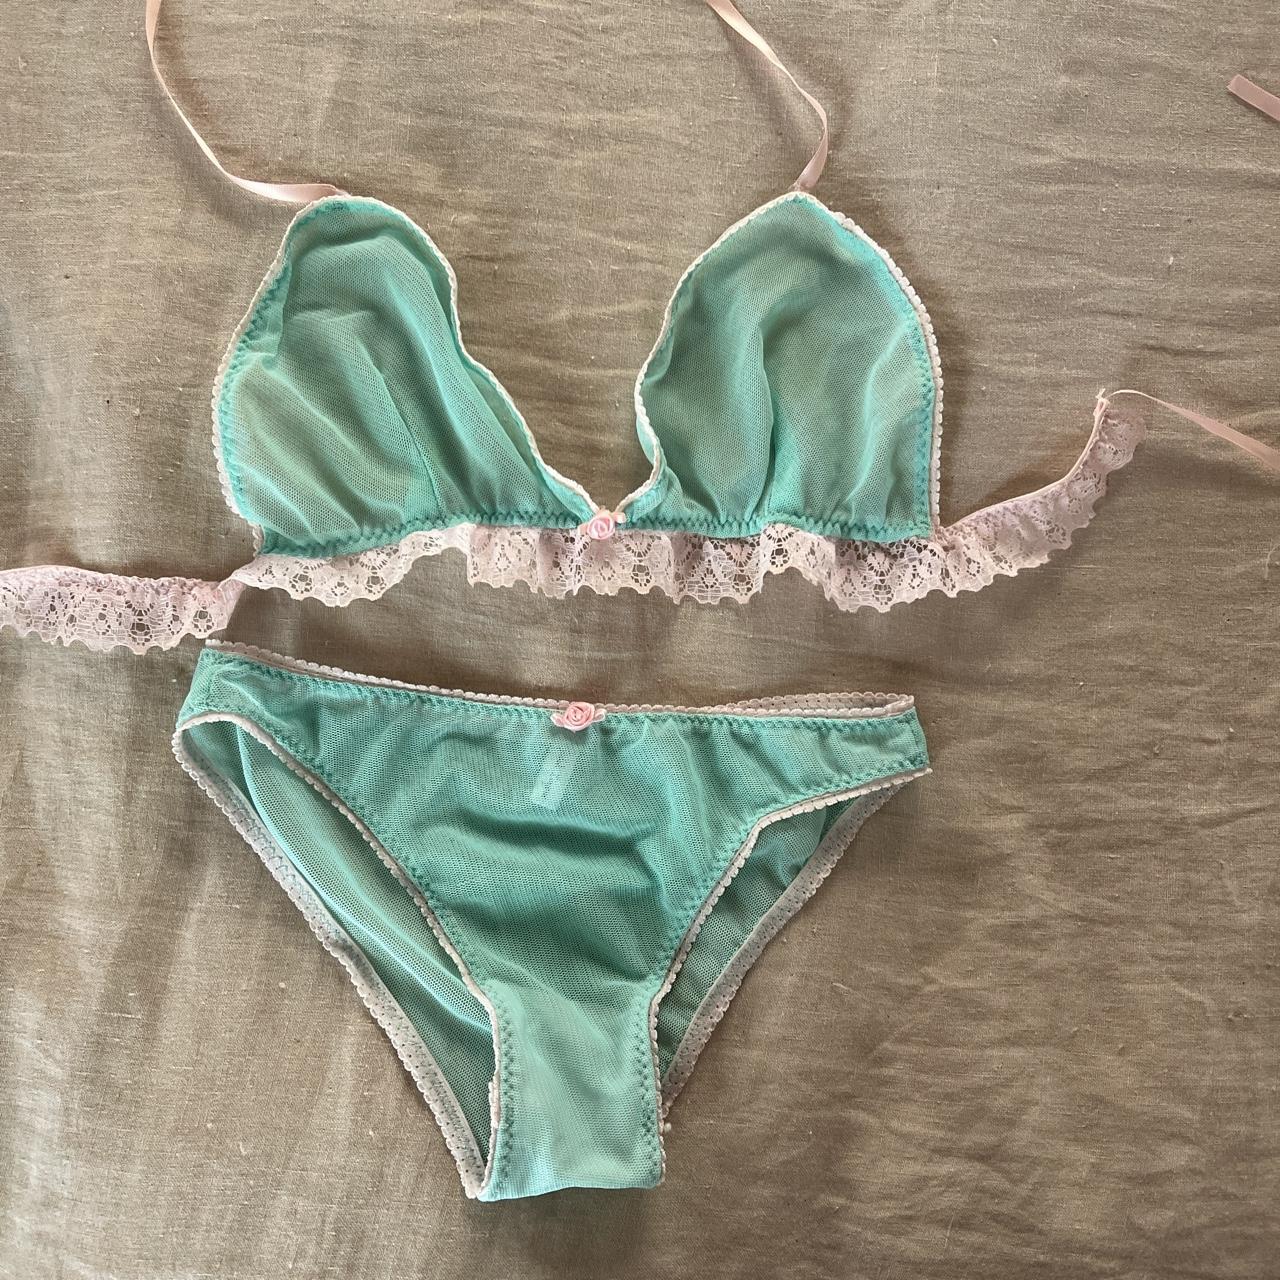 The prettiest lingerie set Made by Julie k Fits... - Depop